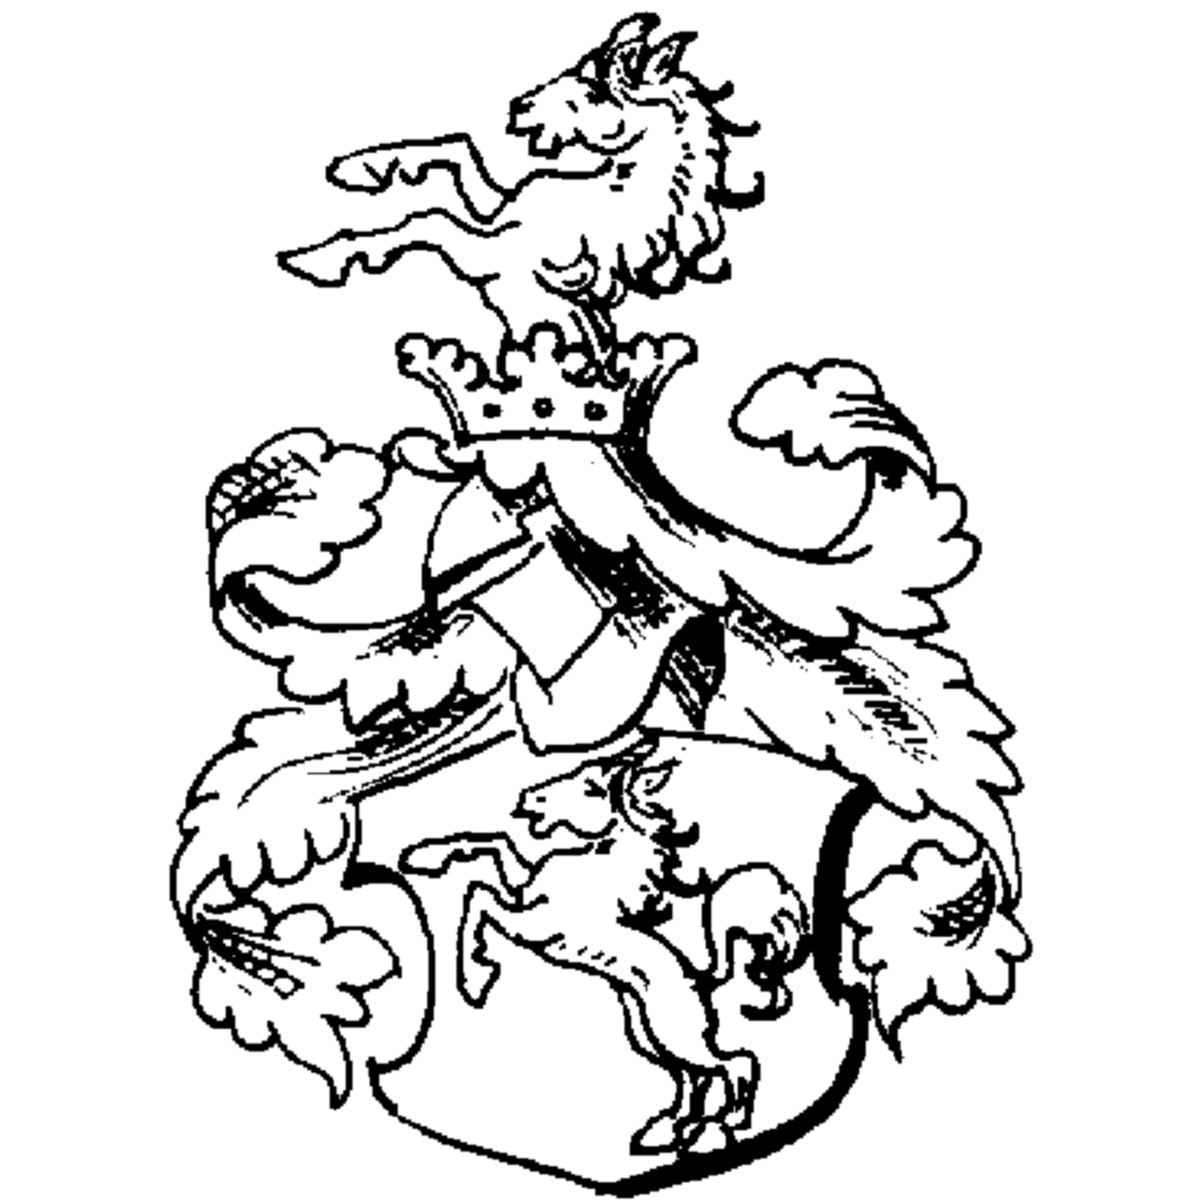 Wappen der Familie Sternbeck